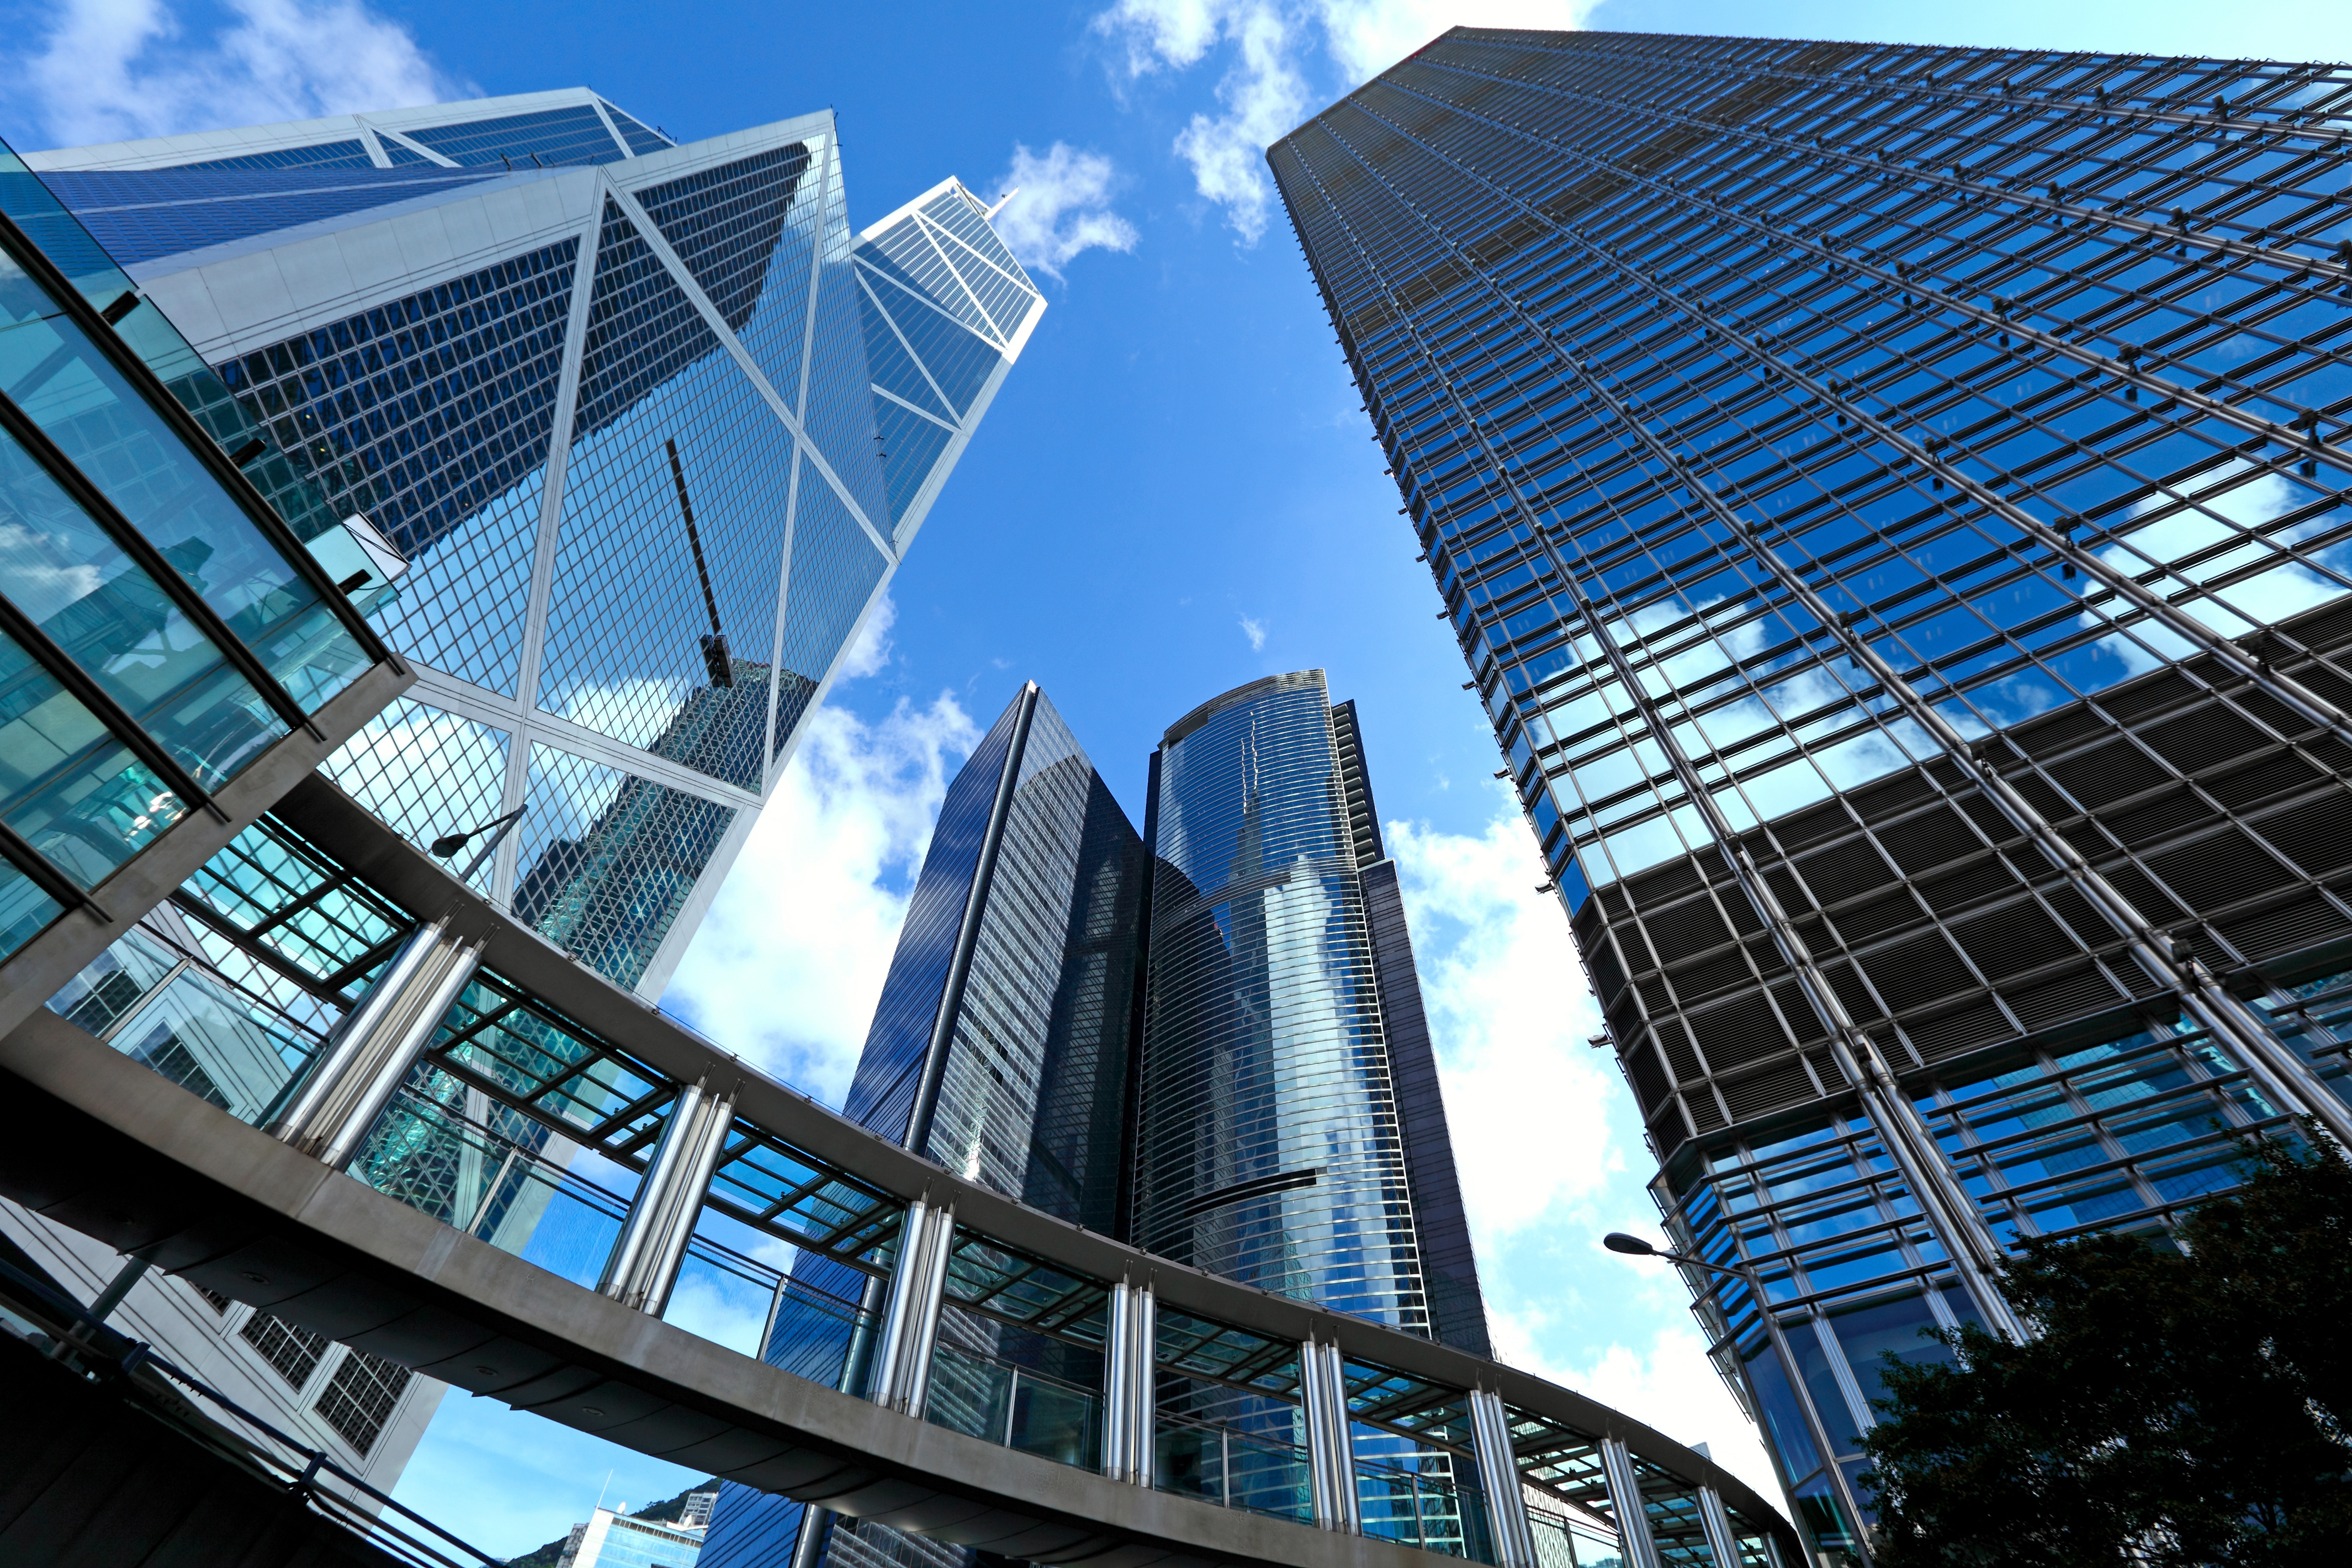 Upward view of glass buildings 